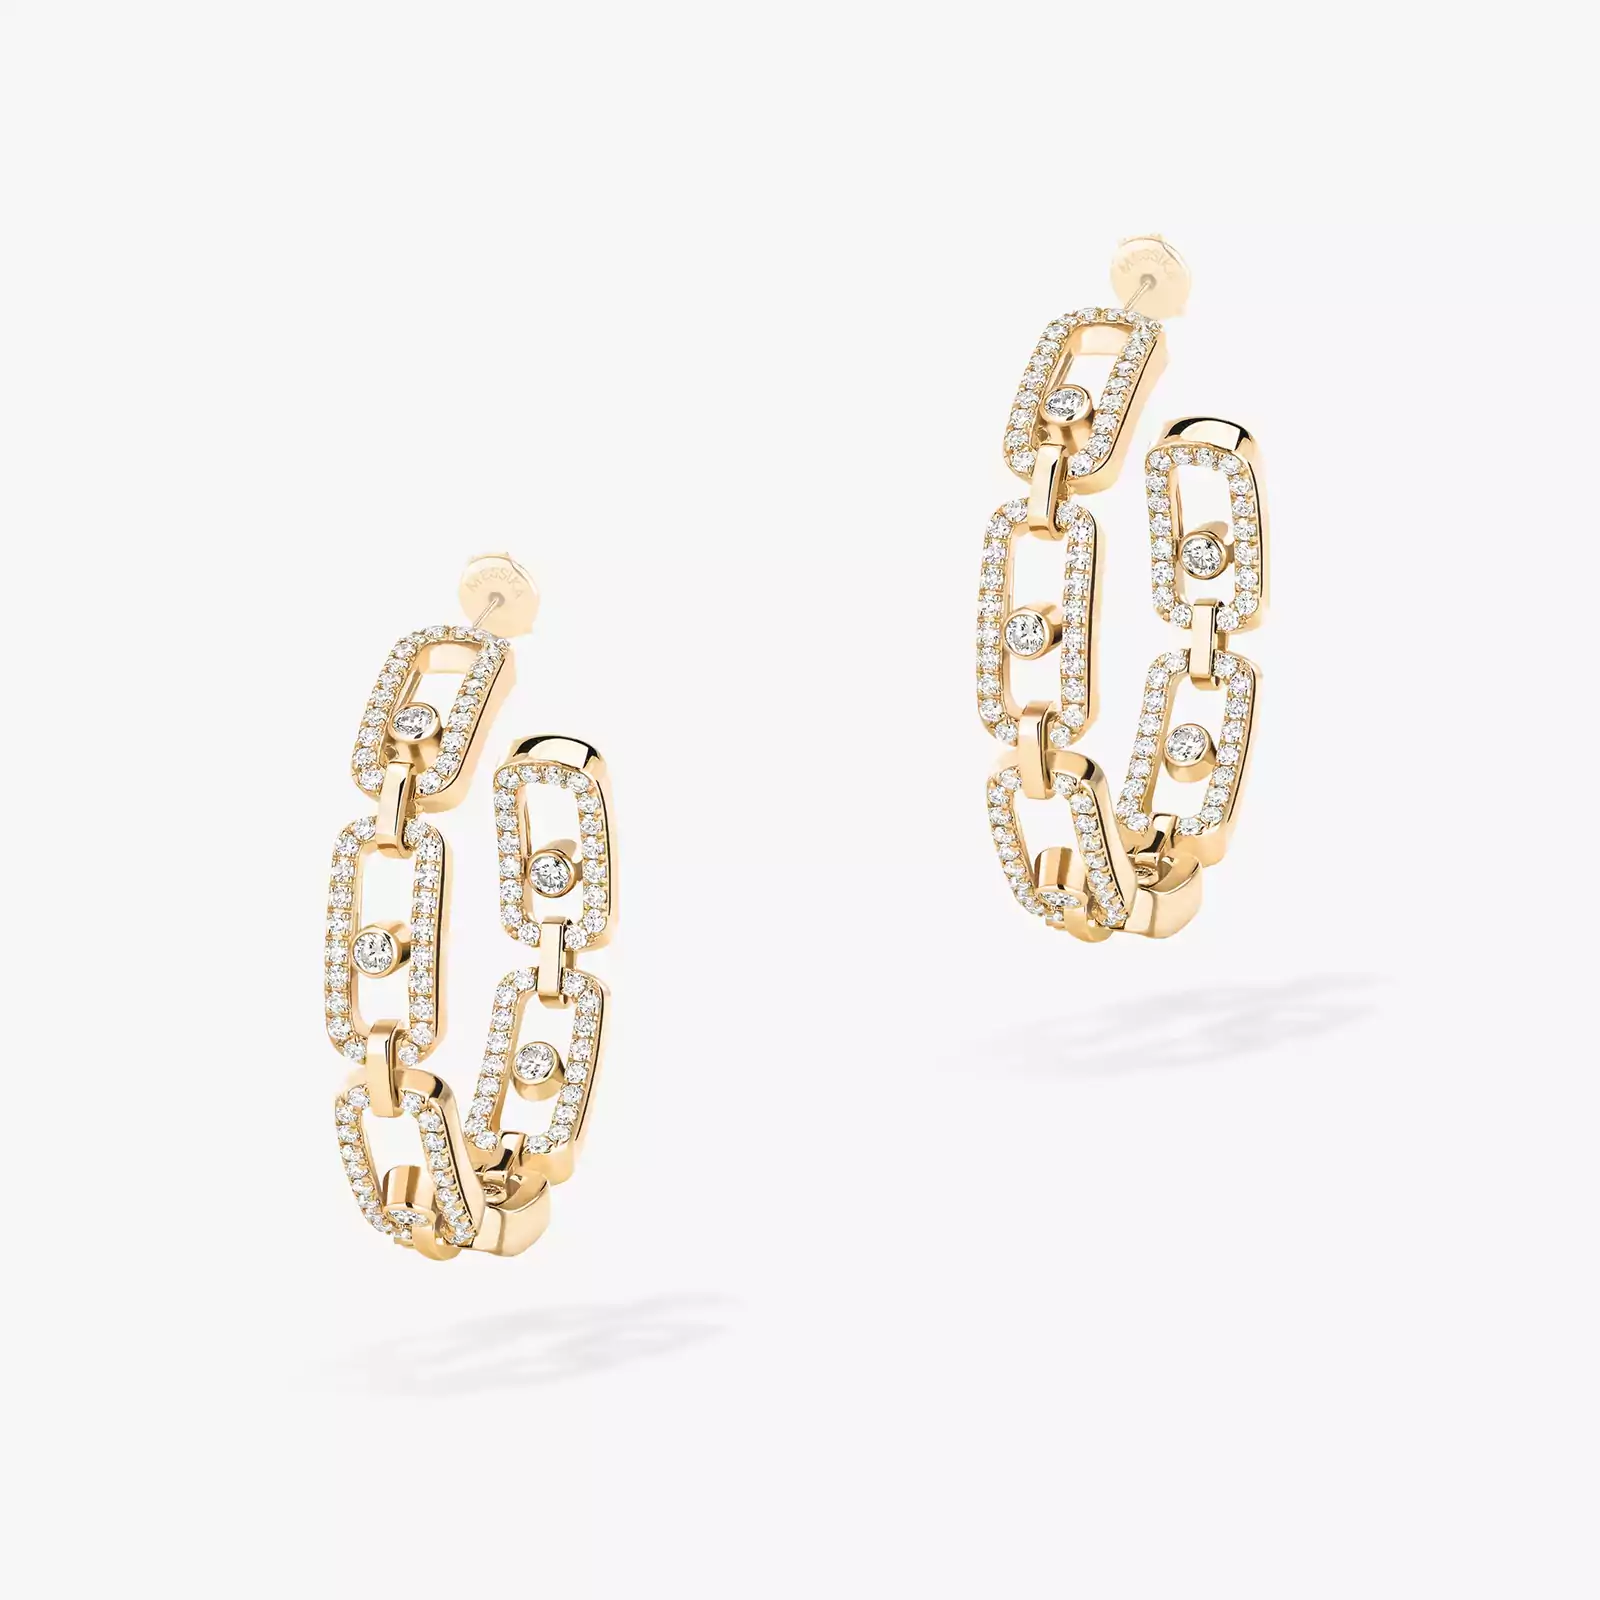 Move Link SM Hoop Earrings Yellow Gold For Her Diamond Earrings 12716-YG